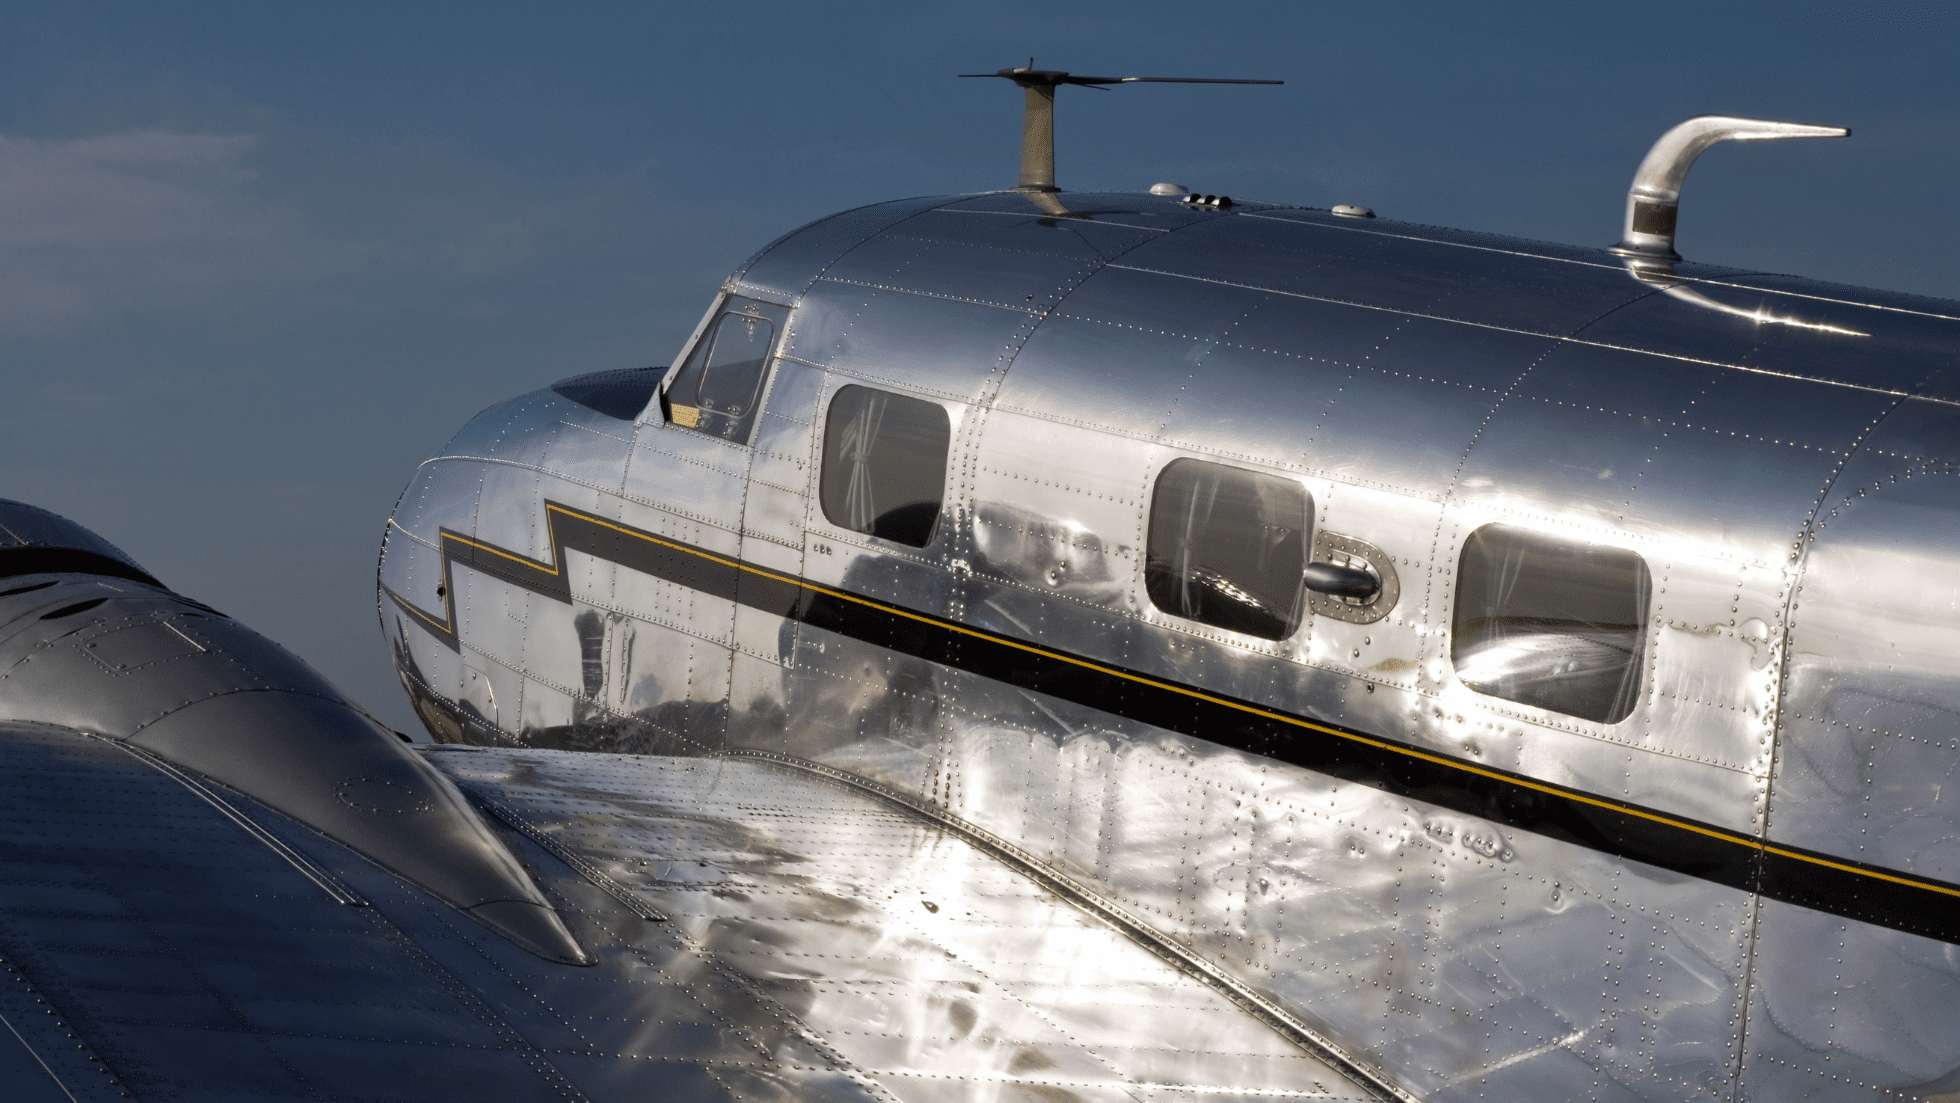 Amelia Earhart – The Dream of a Global Flight